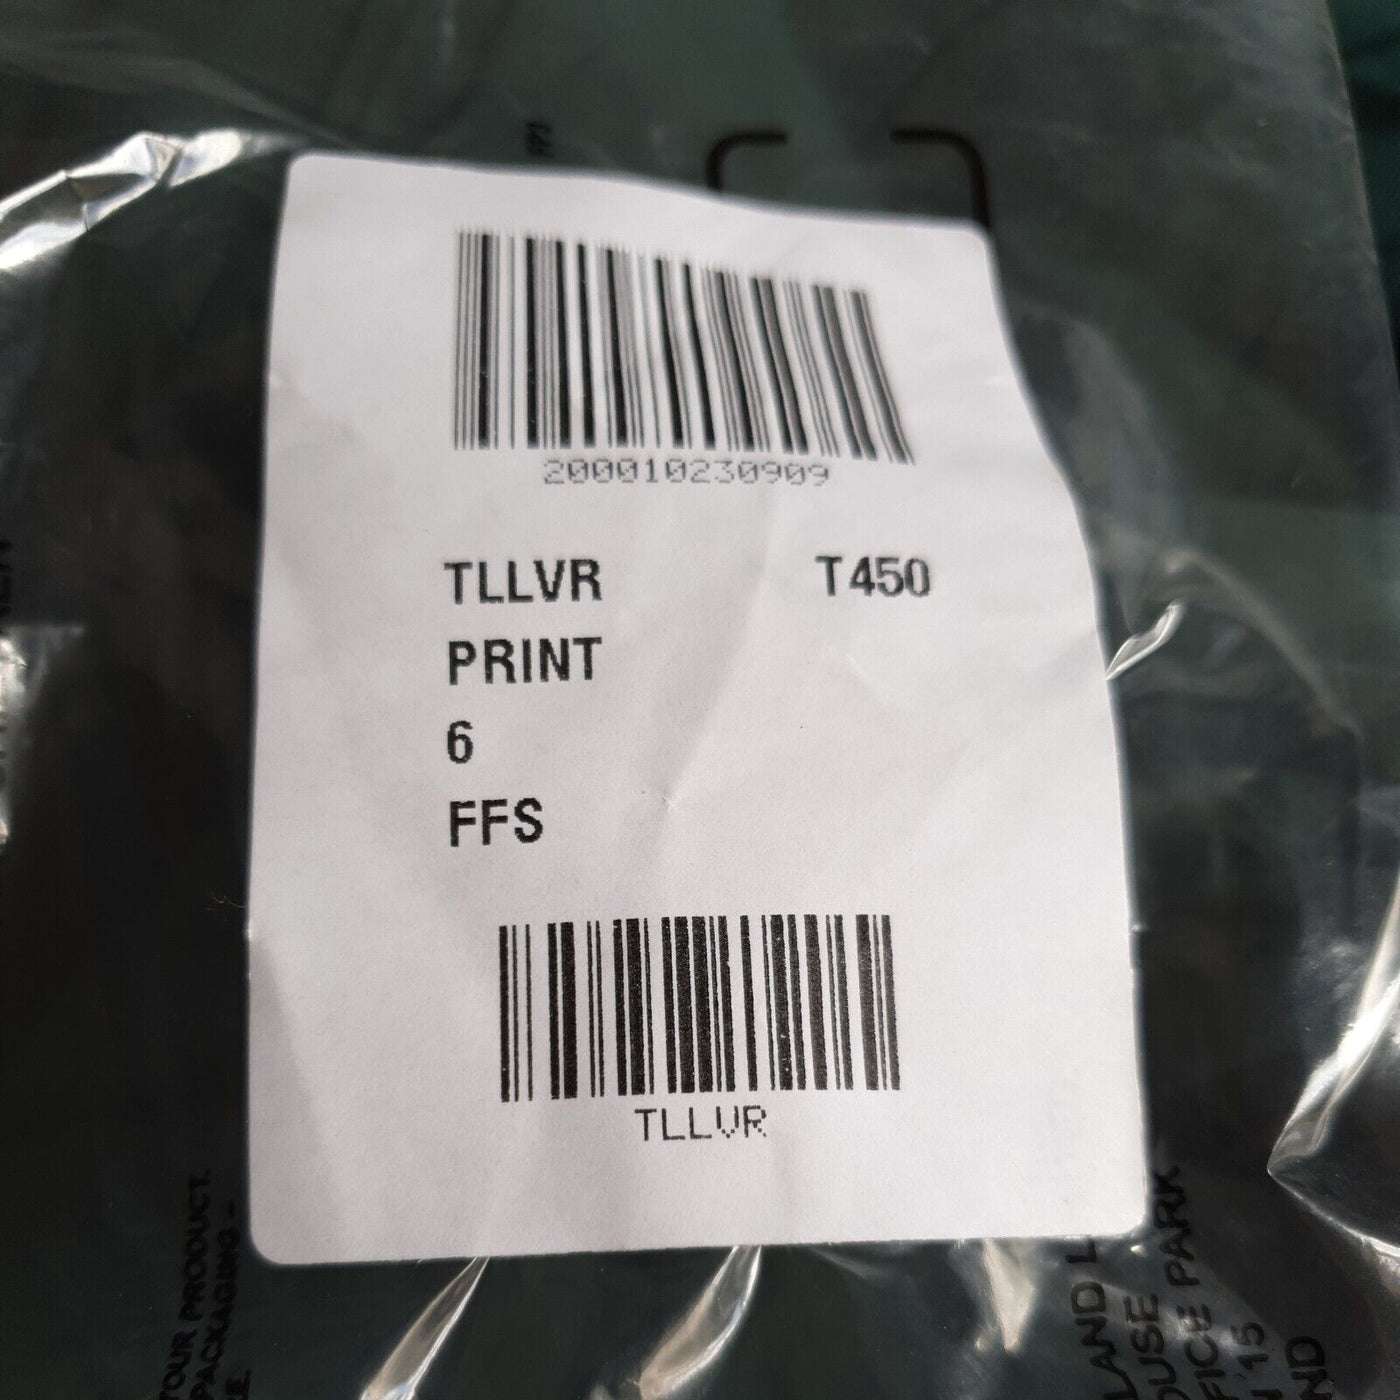 AX Paris Teal Midi Shirt Dress Size 6****Ref V64